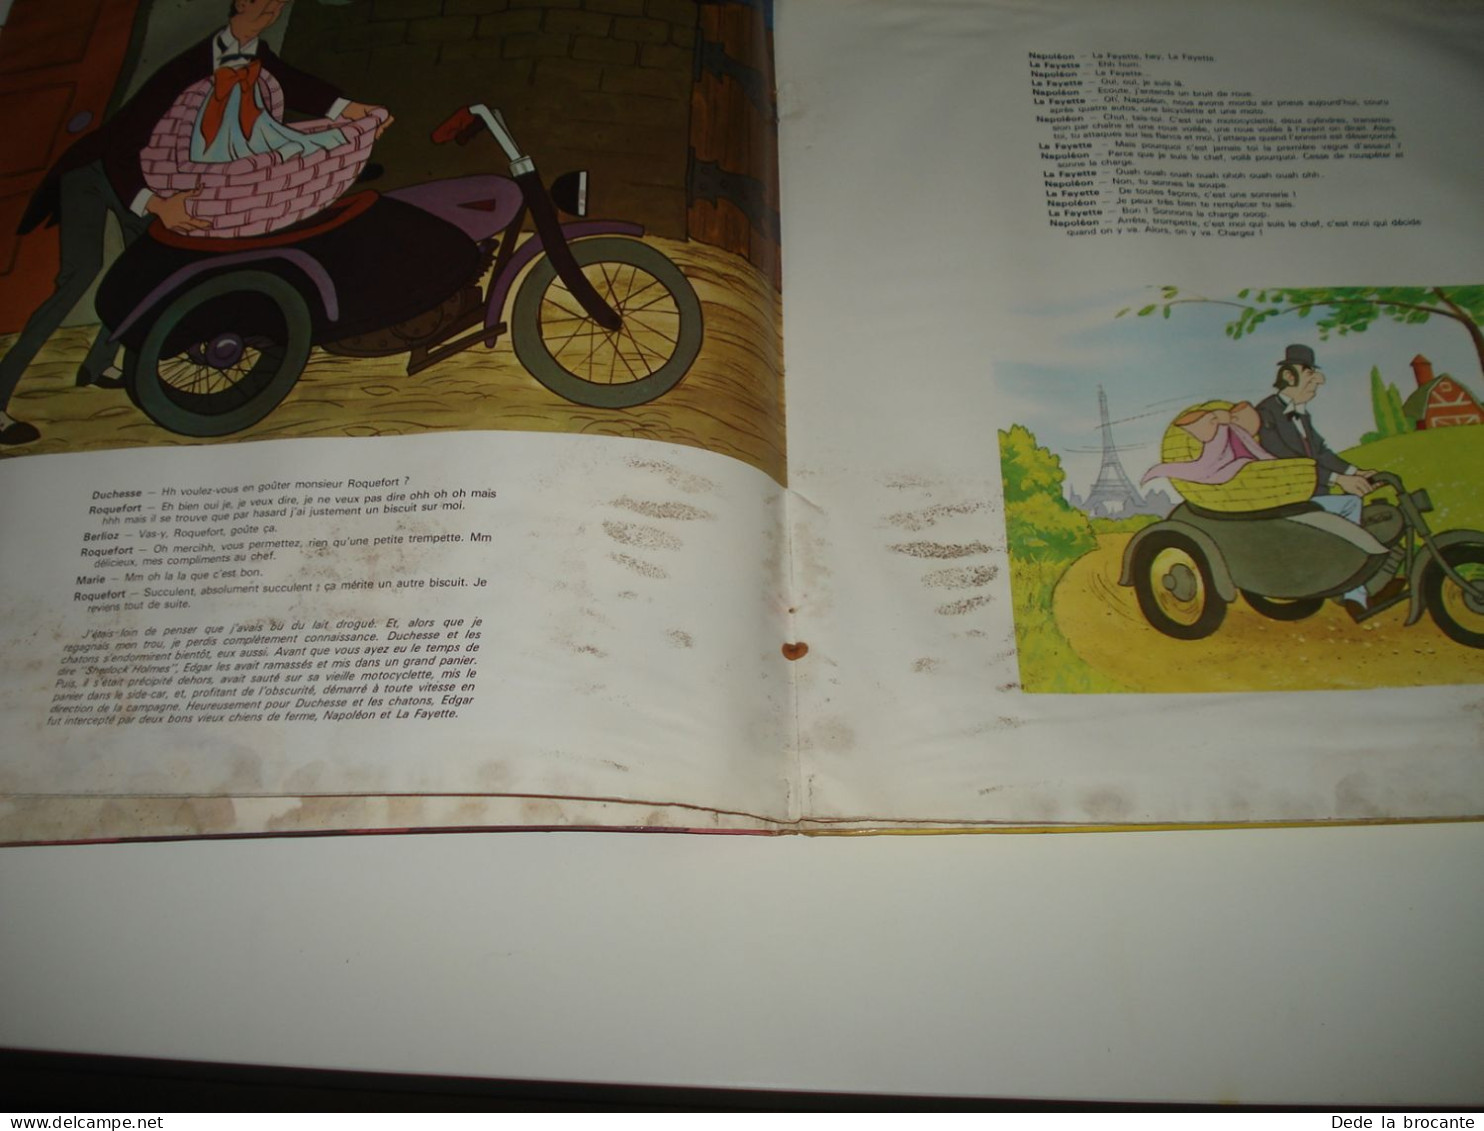 B4 / Aristochats - Roger Carel - LP - Disneyland - ST 3995 F - Fr  1971 - M/G - Children